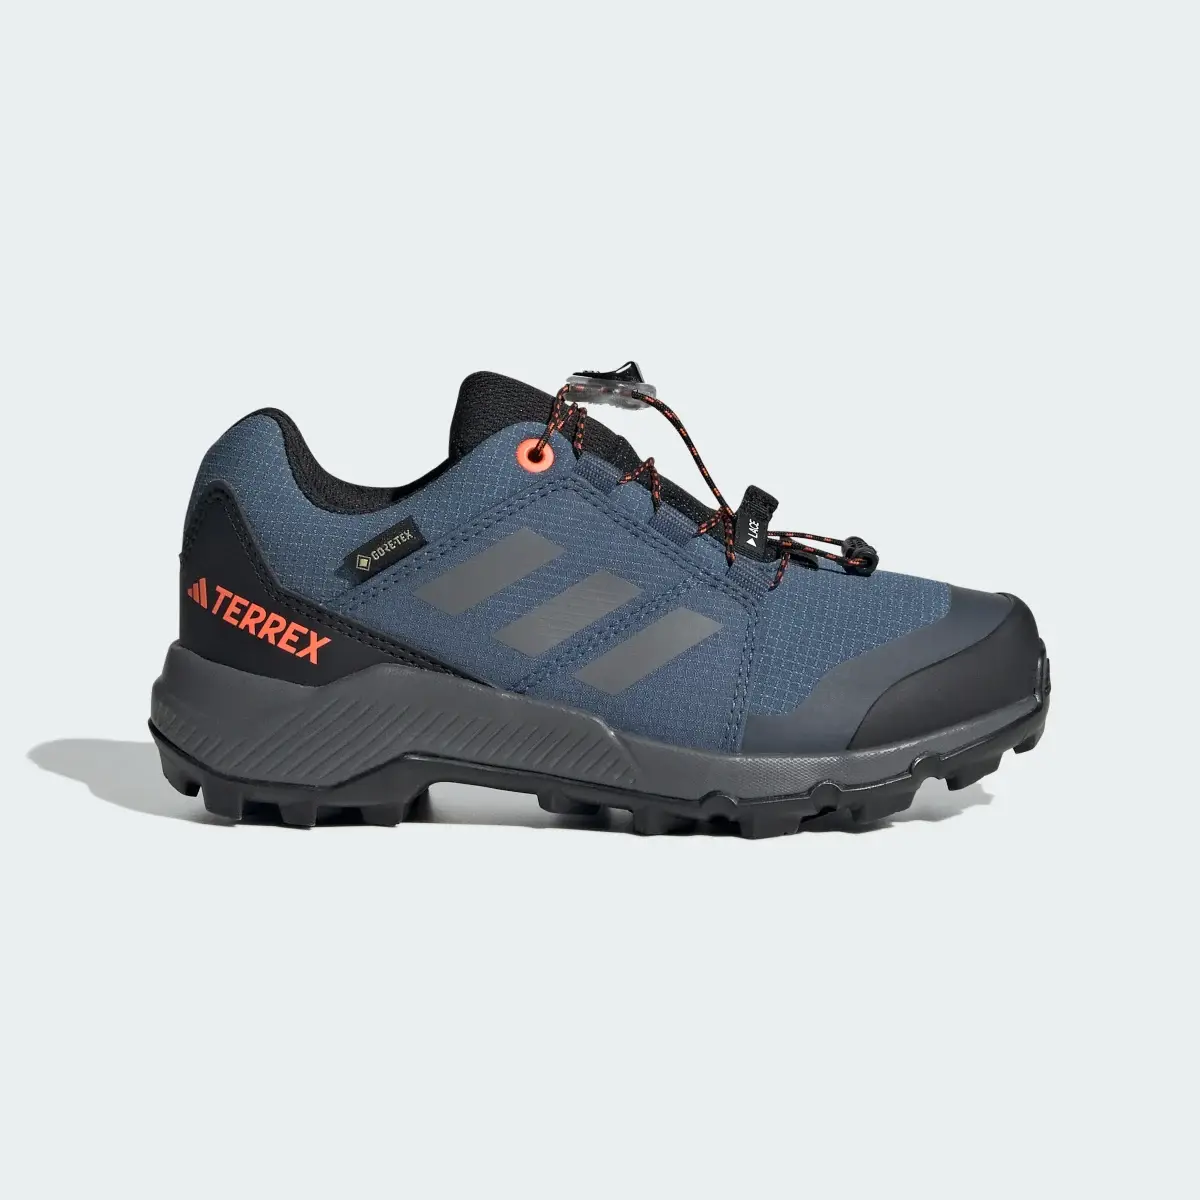 Adidas Terrex GORE-TEX Hiking Shoes. 2